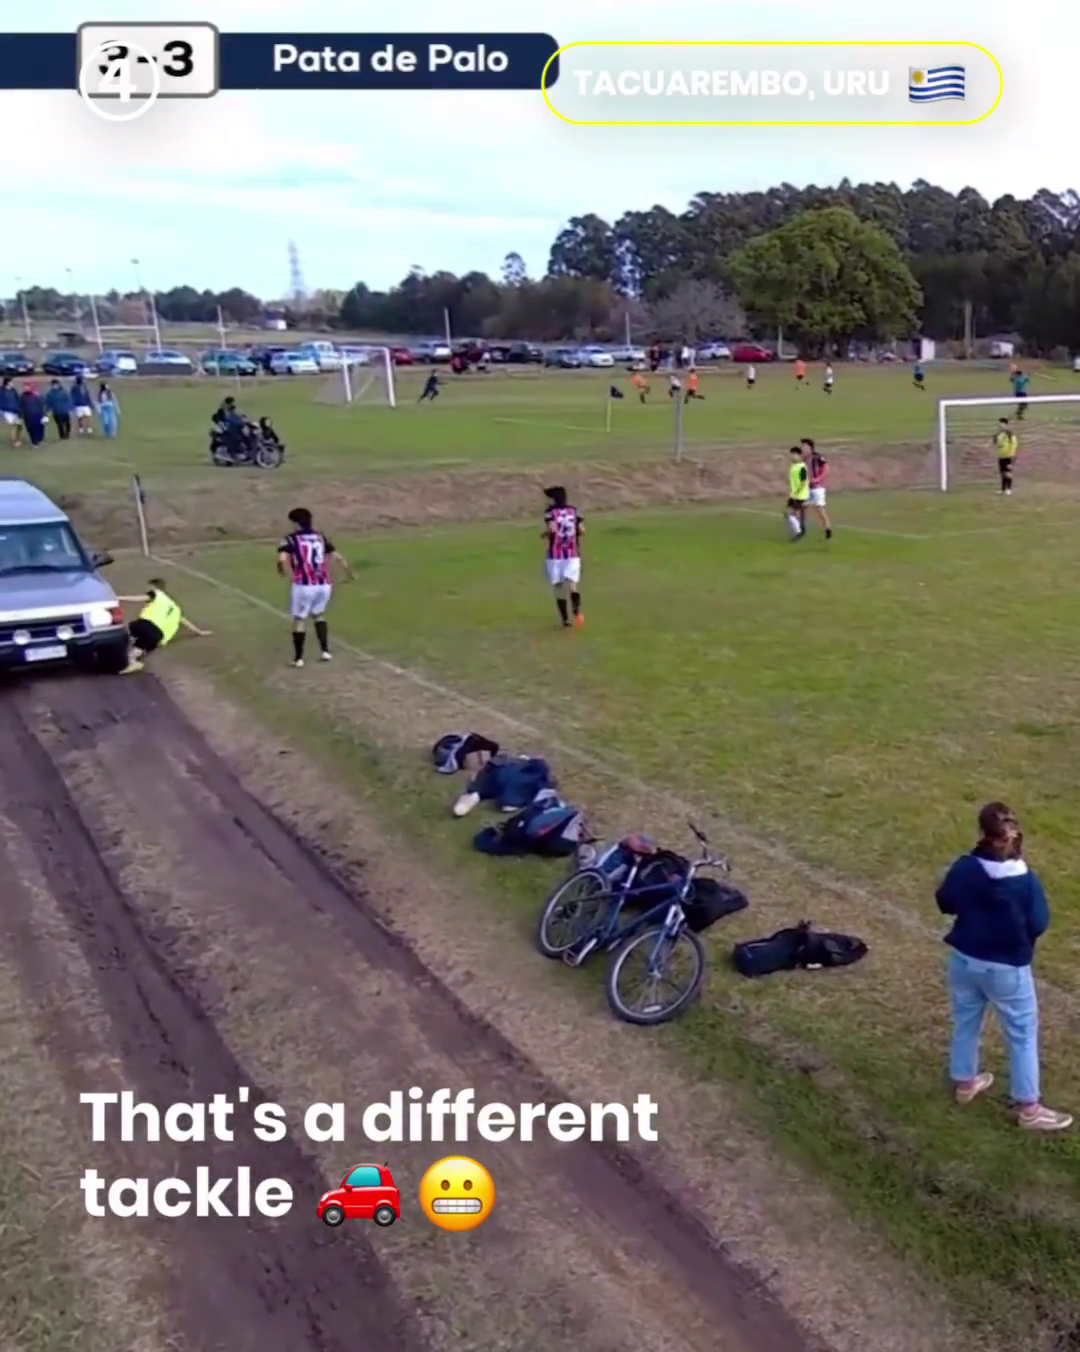 В Уругвае футболист во время матча неожиданно попал под машину. Видео